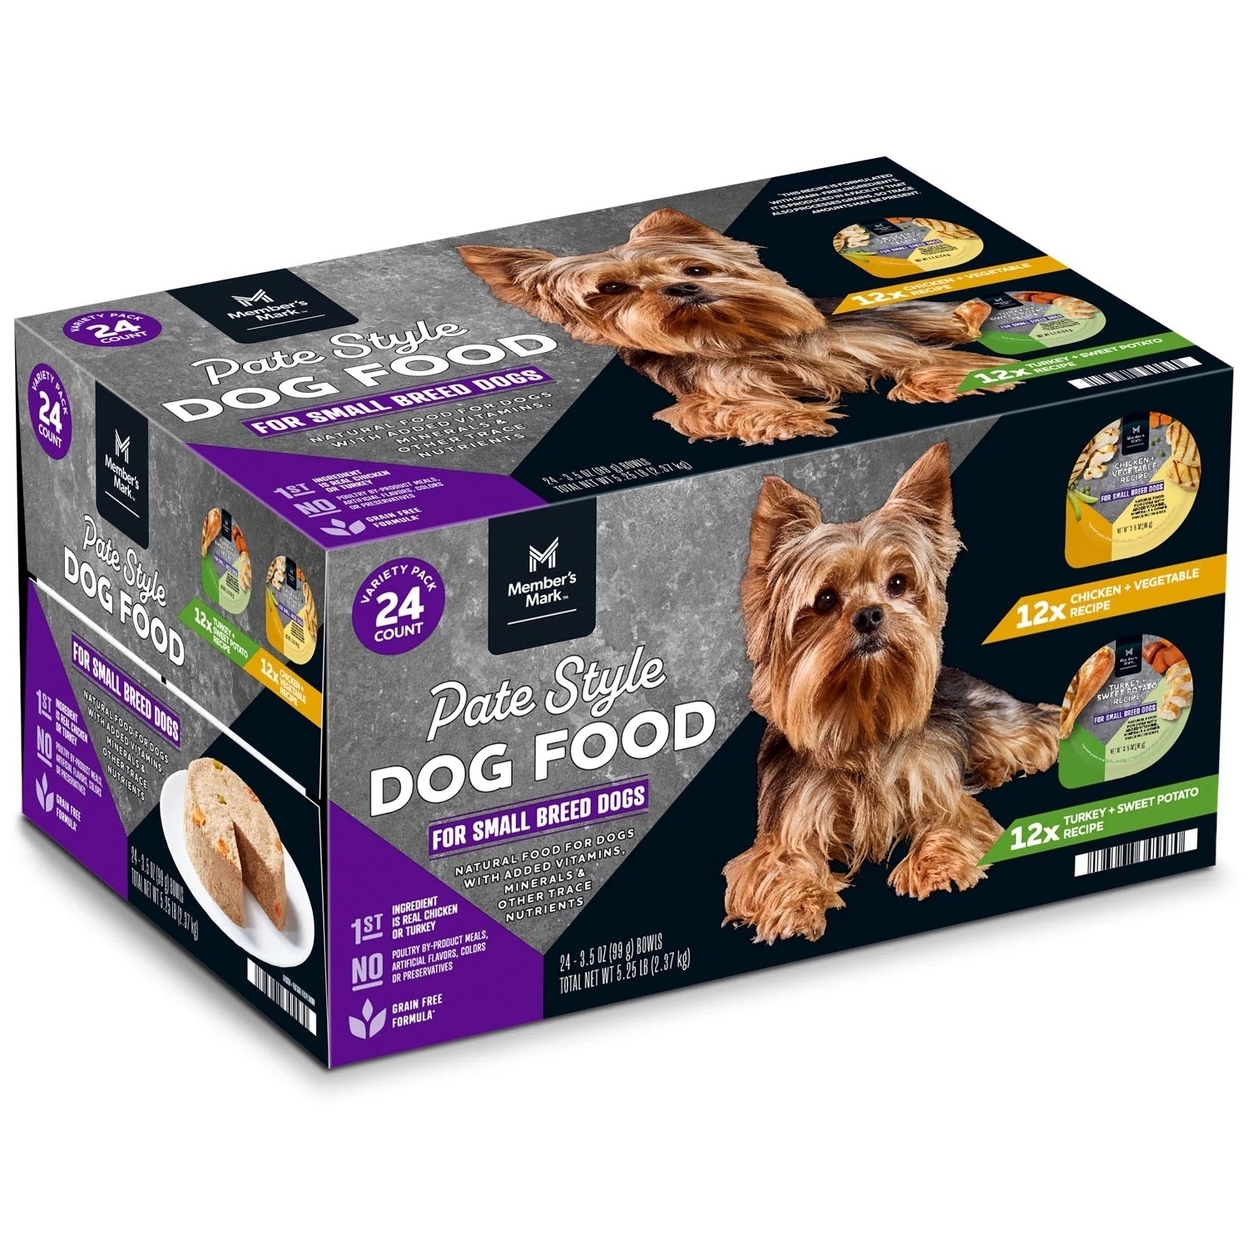 Memberâs Mark Pate Style Dog Food Variety Pack, 3.5 Ounce (Pack Of 24)